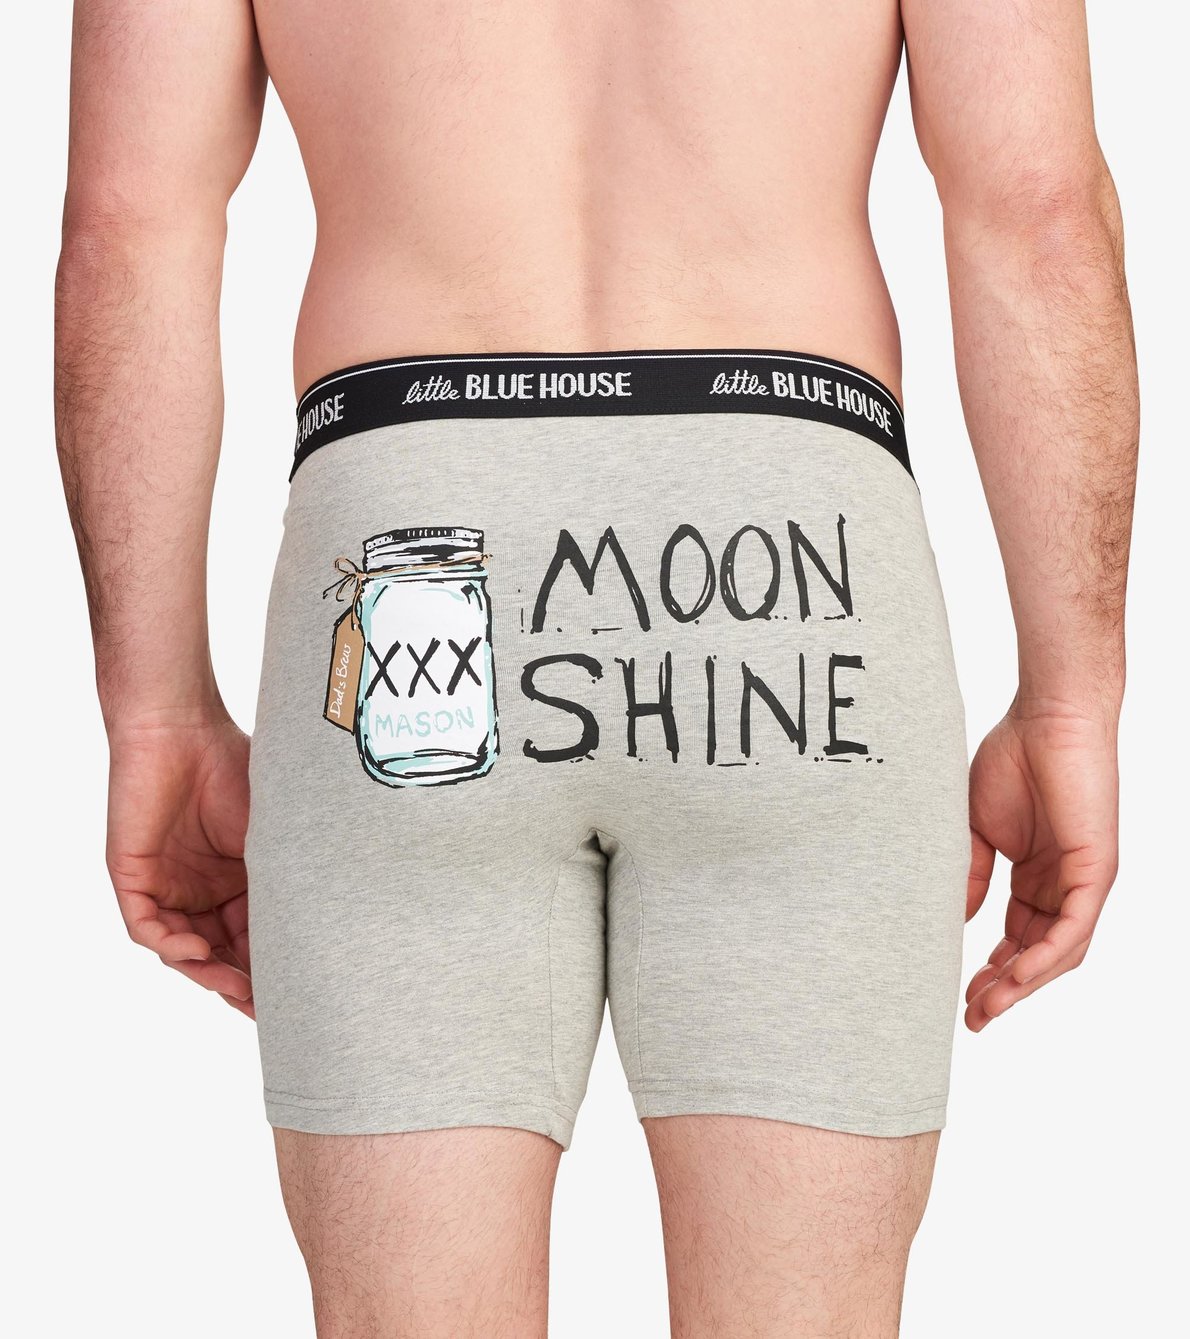 View larger image of Moonshine Men's Boxer Briefs